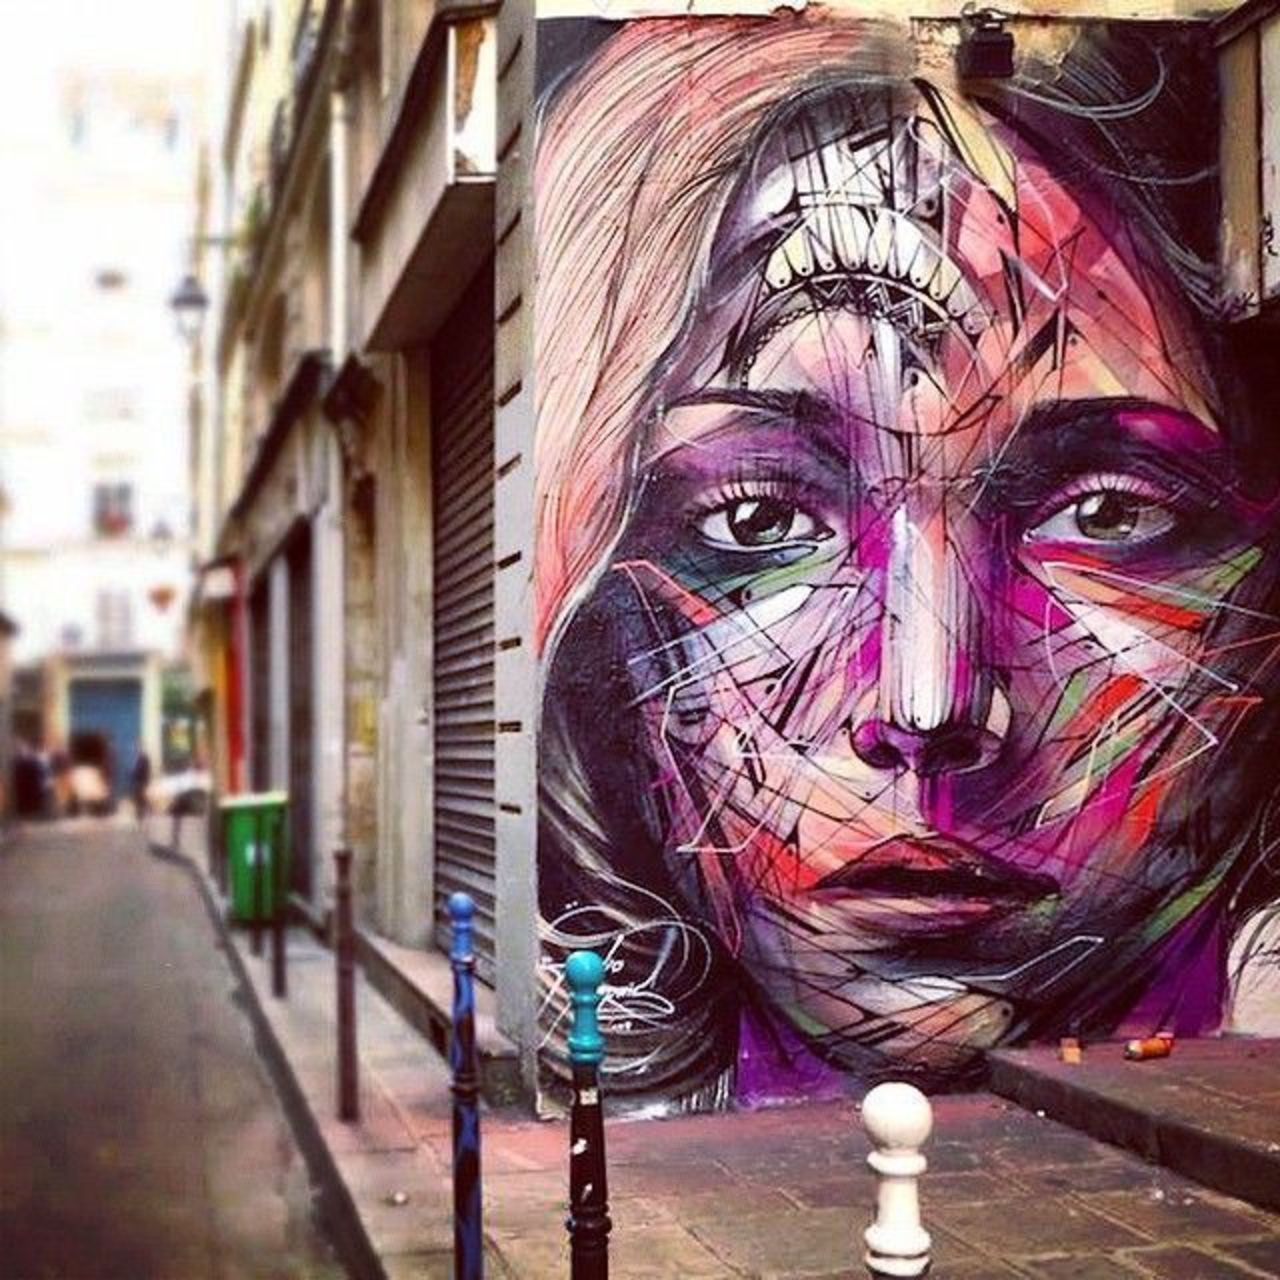 Hopare in Paris#streetart #mural #art #graffiti https://t.co/IZNeh4MNxD